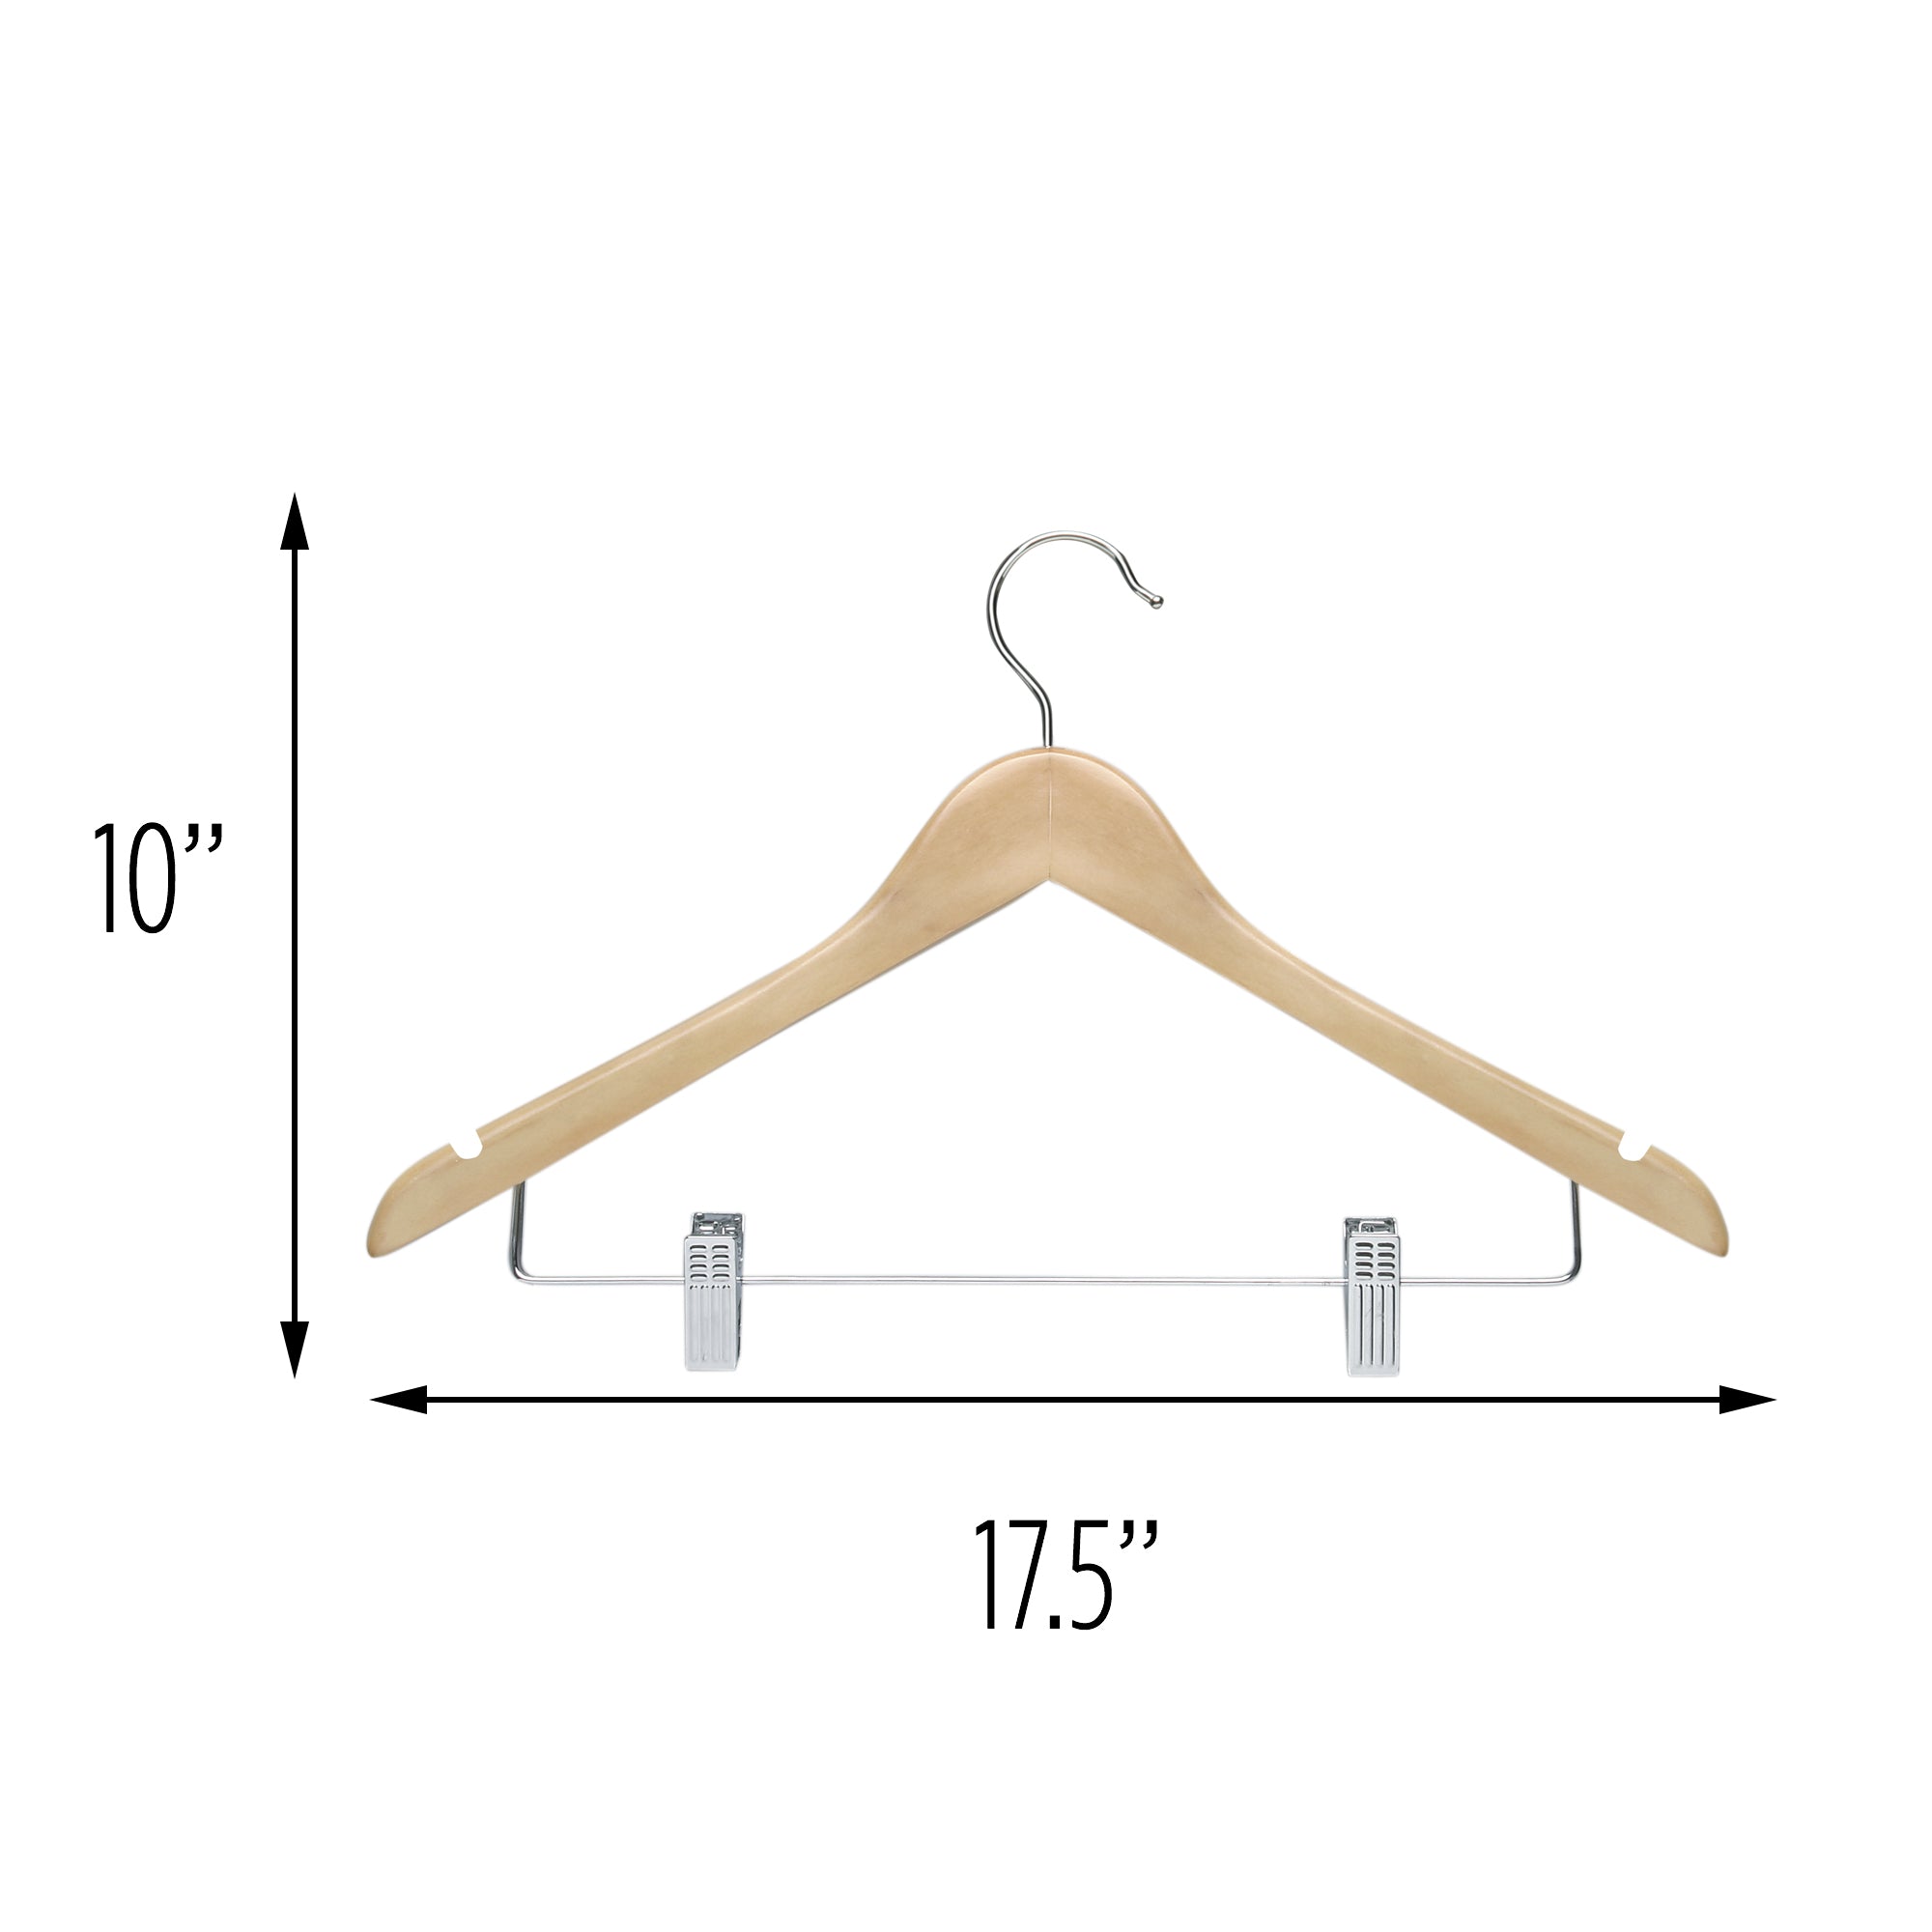 Wooden Hangers 20 Pack - Natural Wood Durable Heavy Duty Coat